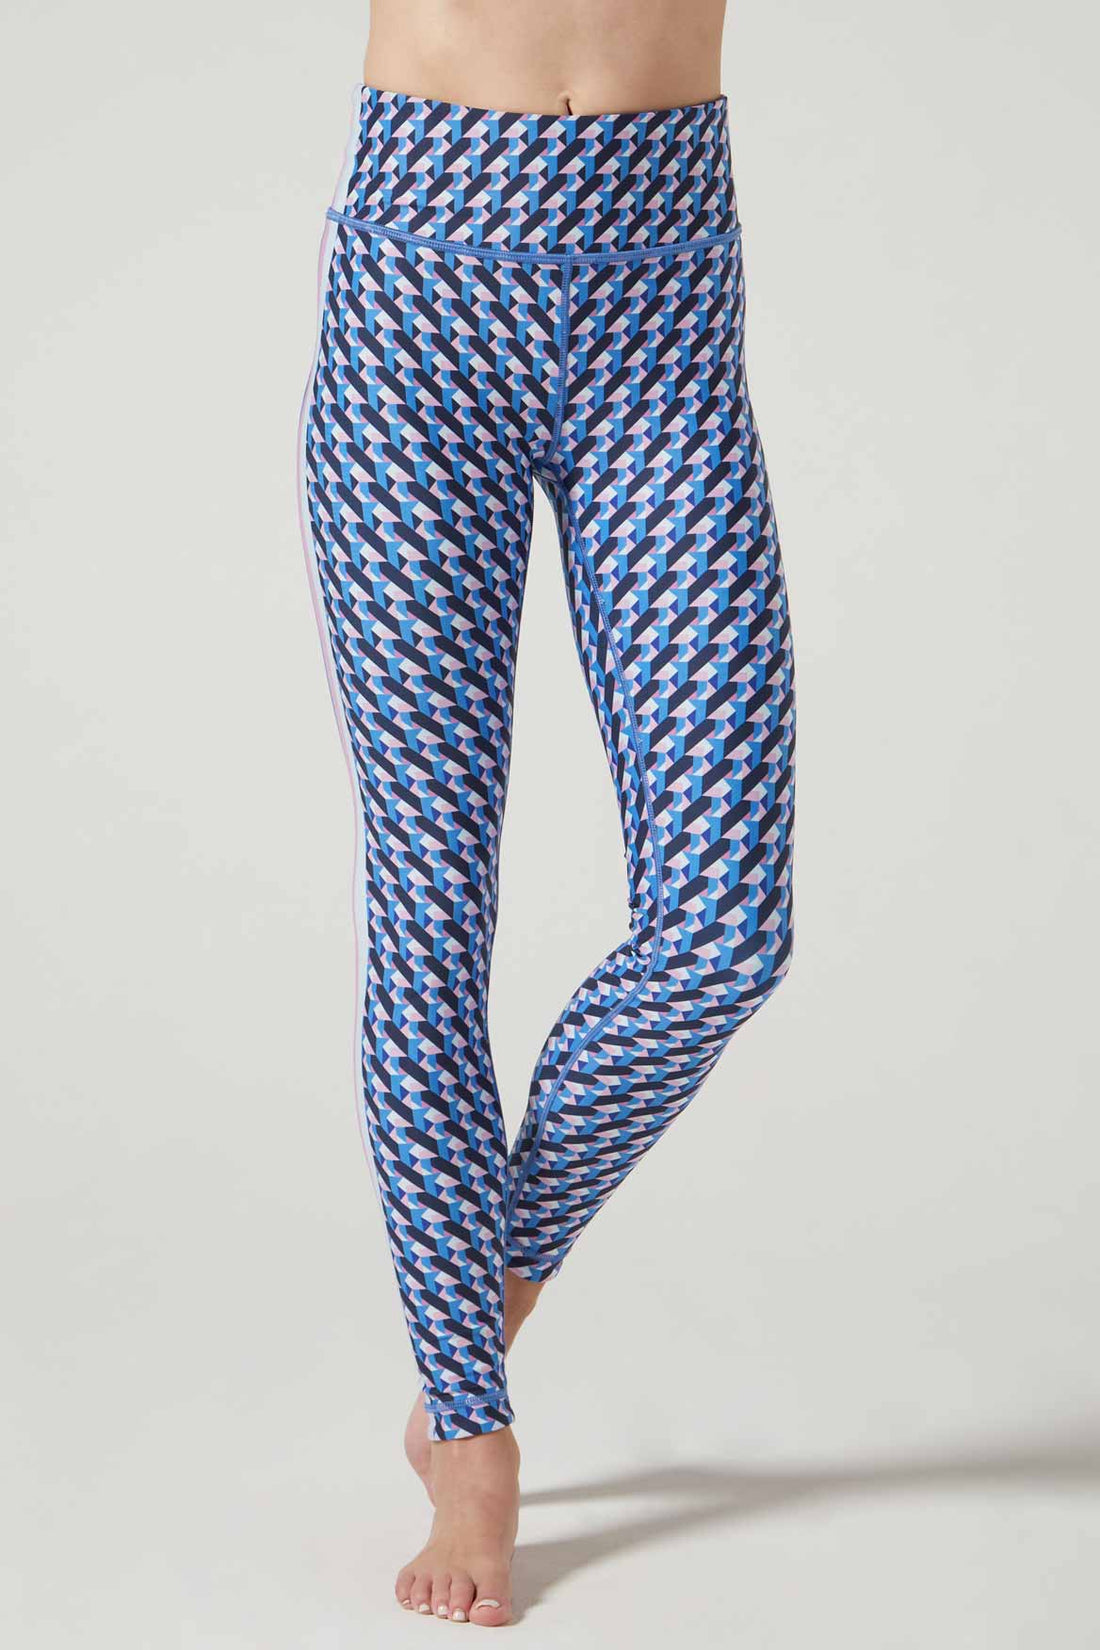 Yoga Pants - Light Blue Block Print - OM Designs